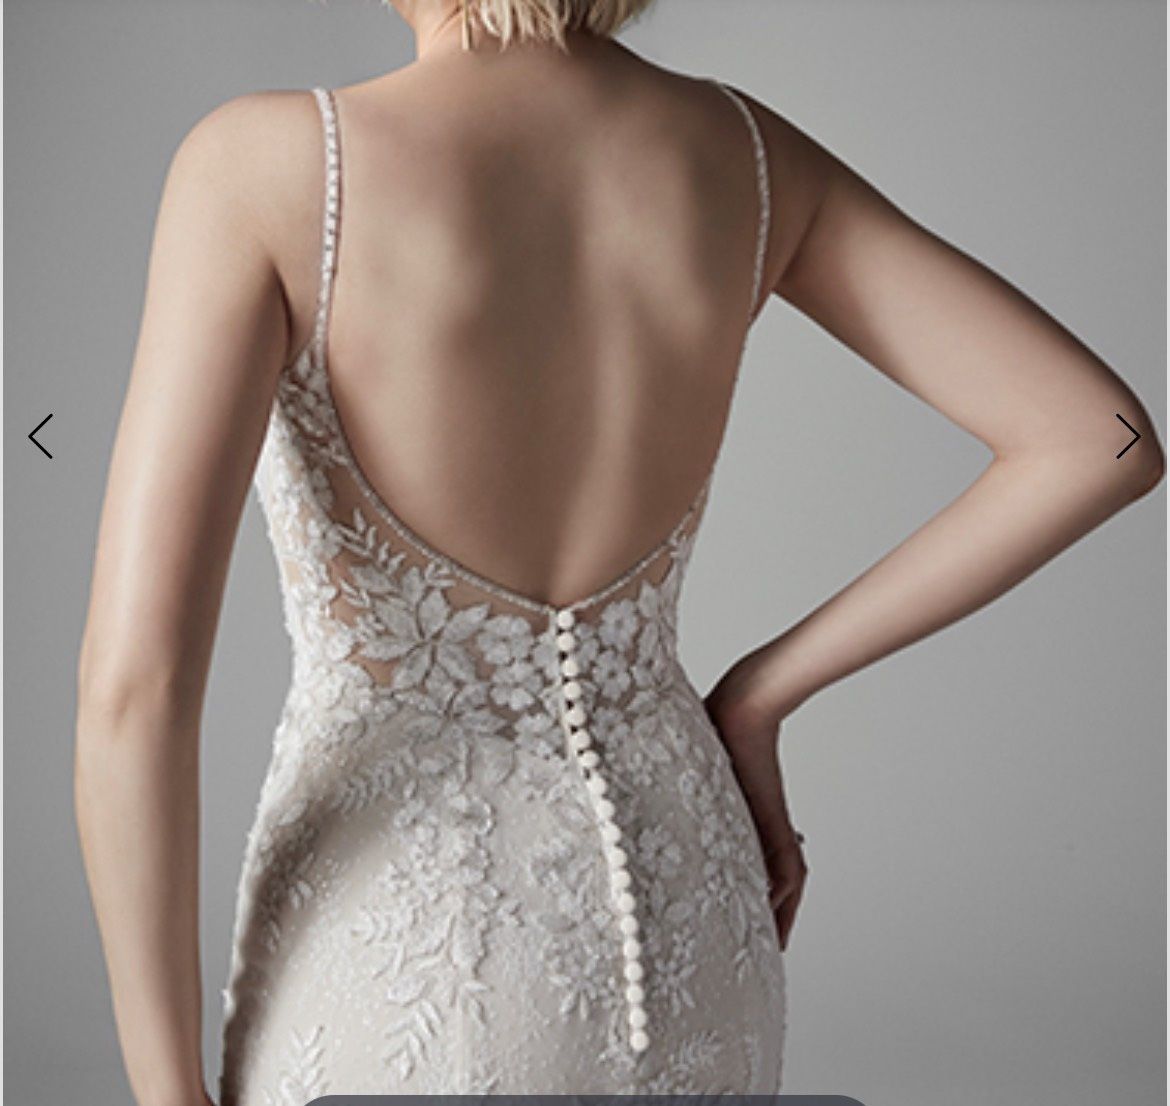 Plus Size 18 Wedding Plunge White Mermaid Dress on Queenly